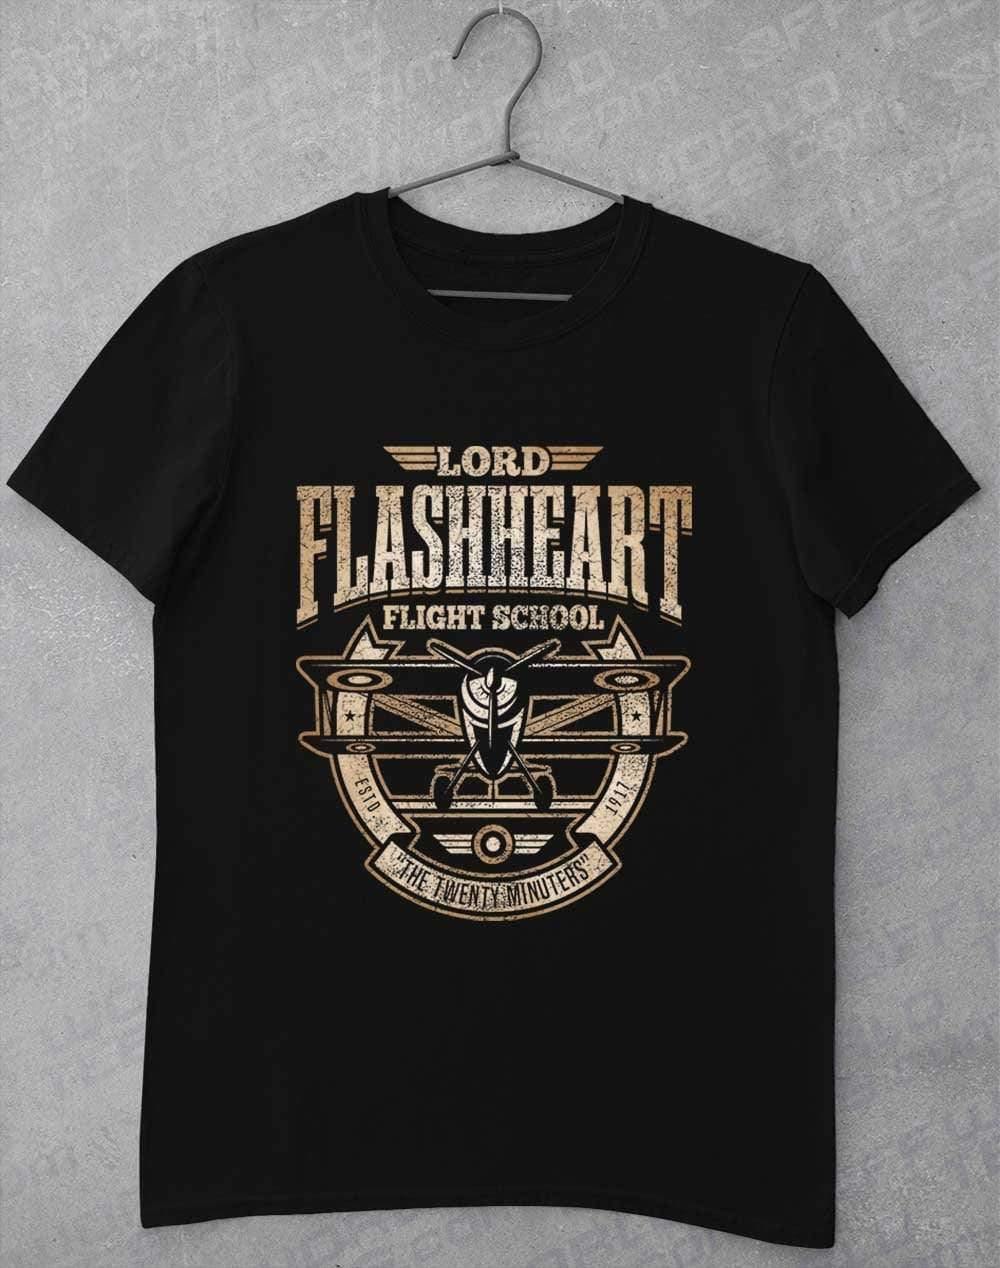 Flashheart's Flight School T-Shirt S / Black  - Off World Tees